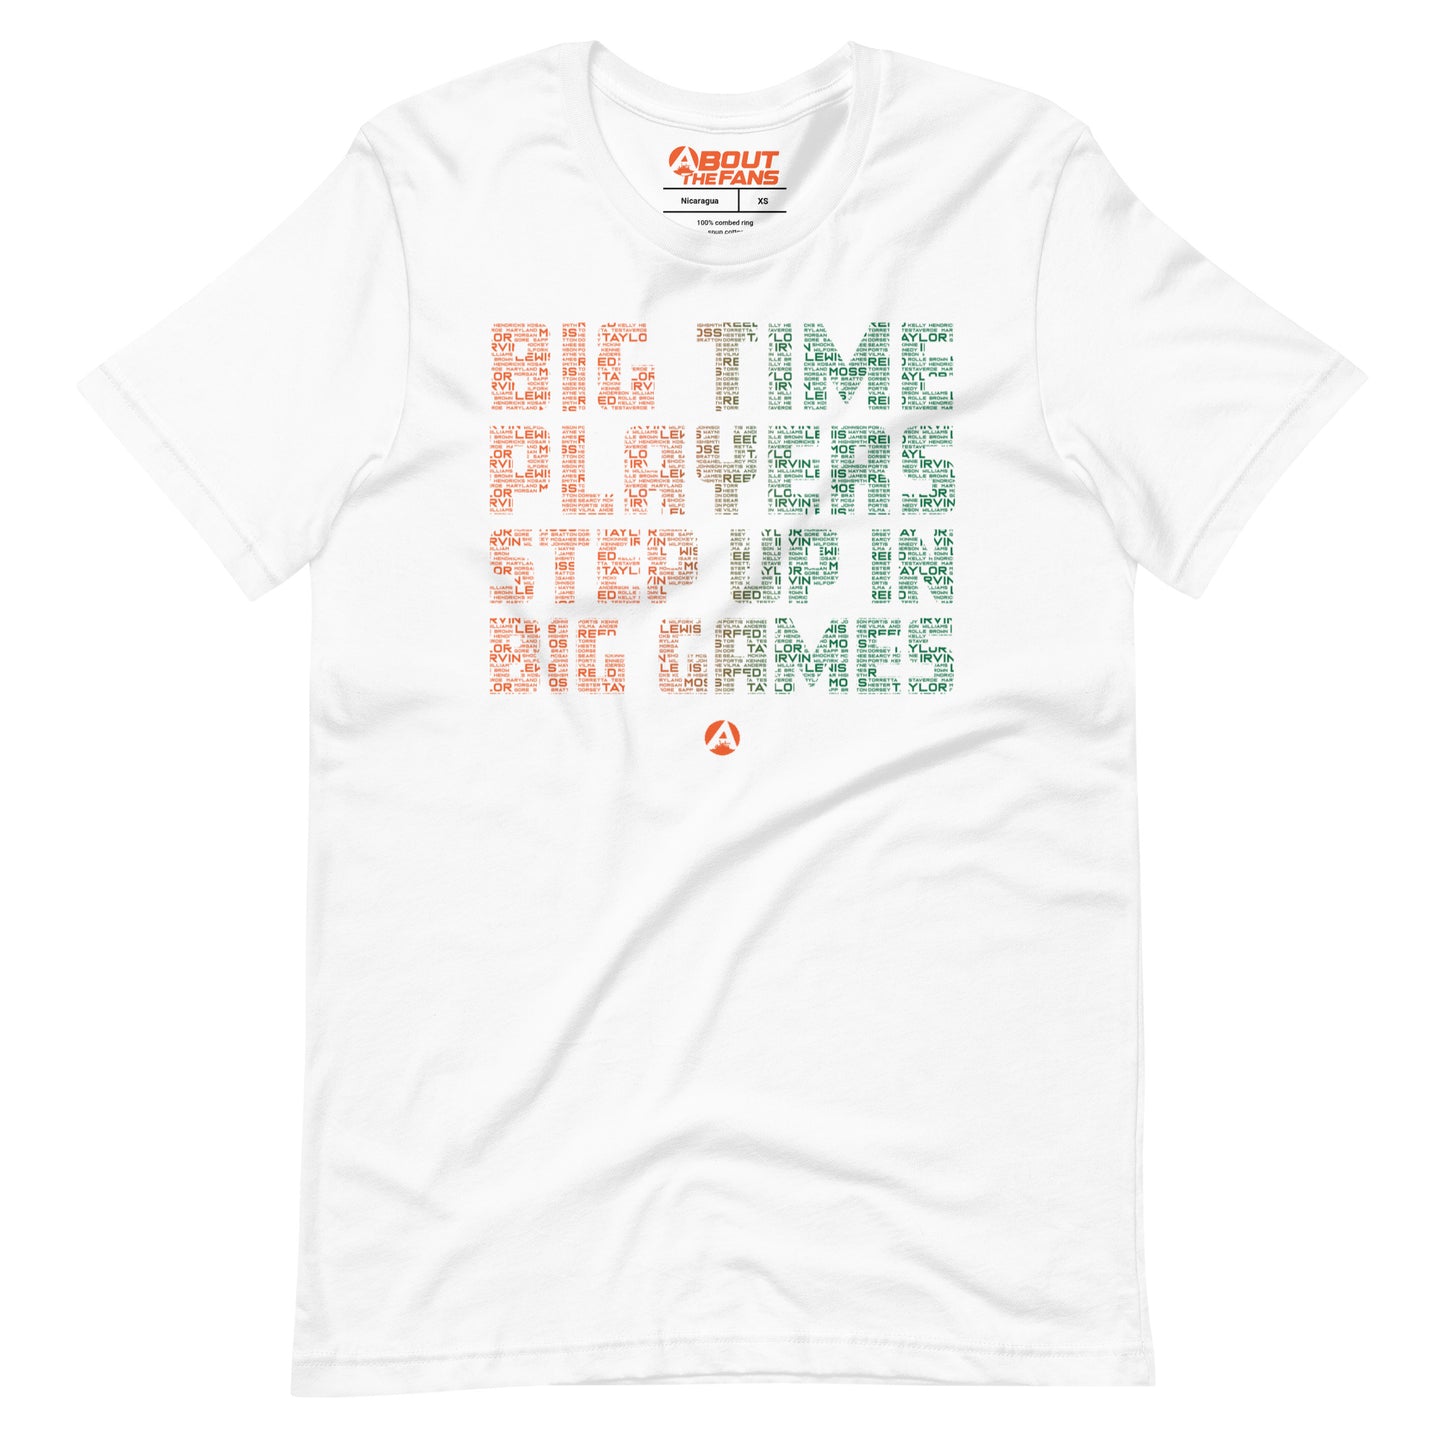 Big Time Players Step Up Shirt